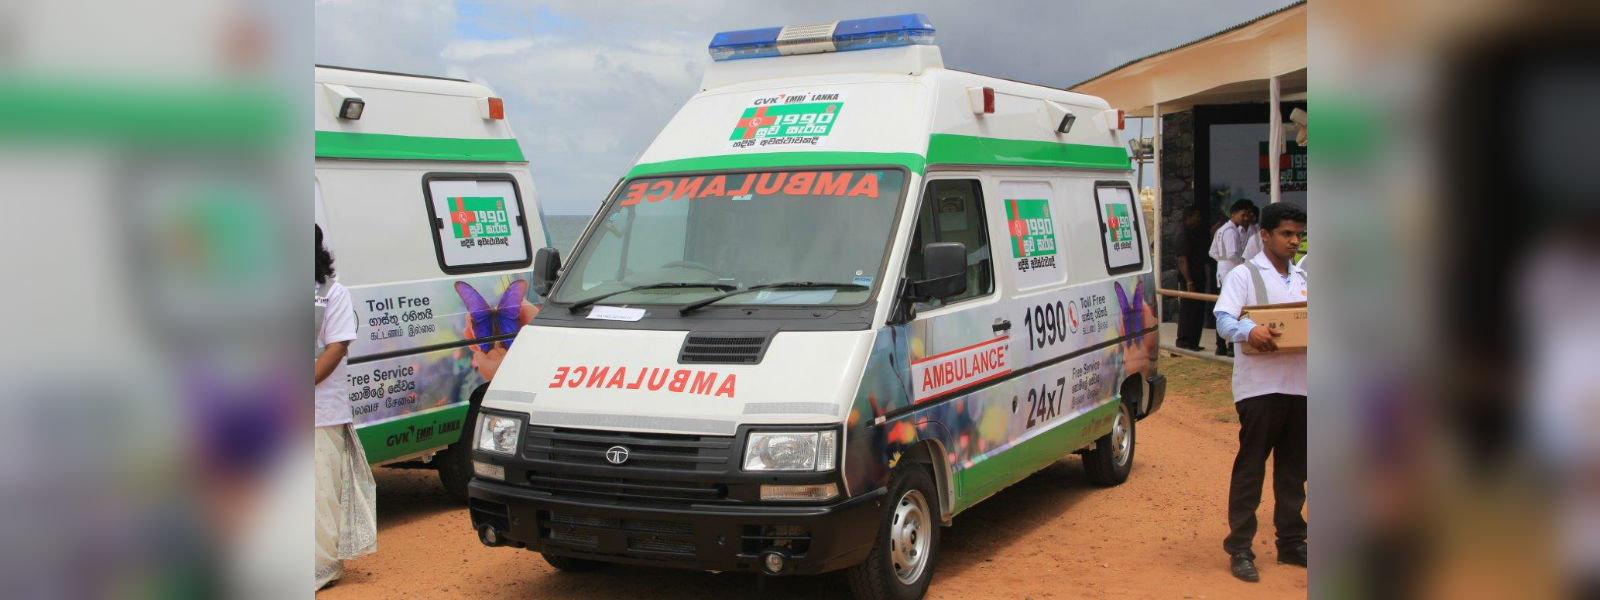 Suwa Seriya on stand-by for medicine needs